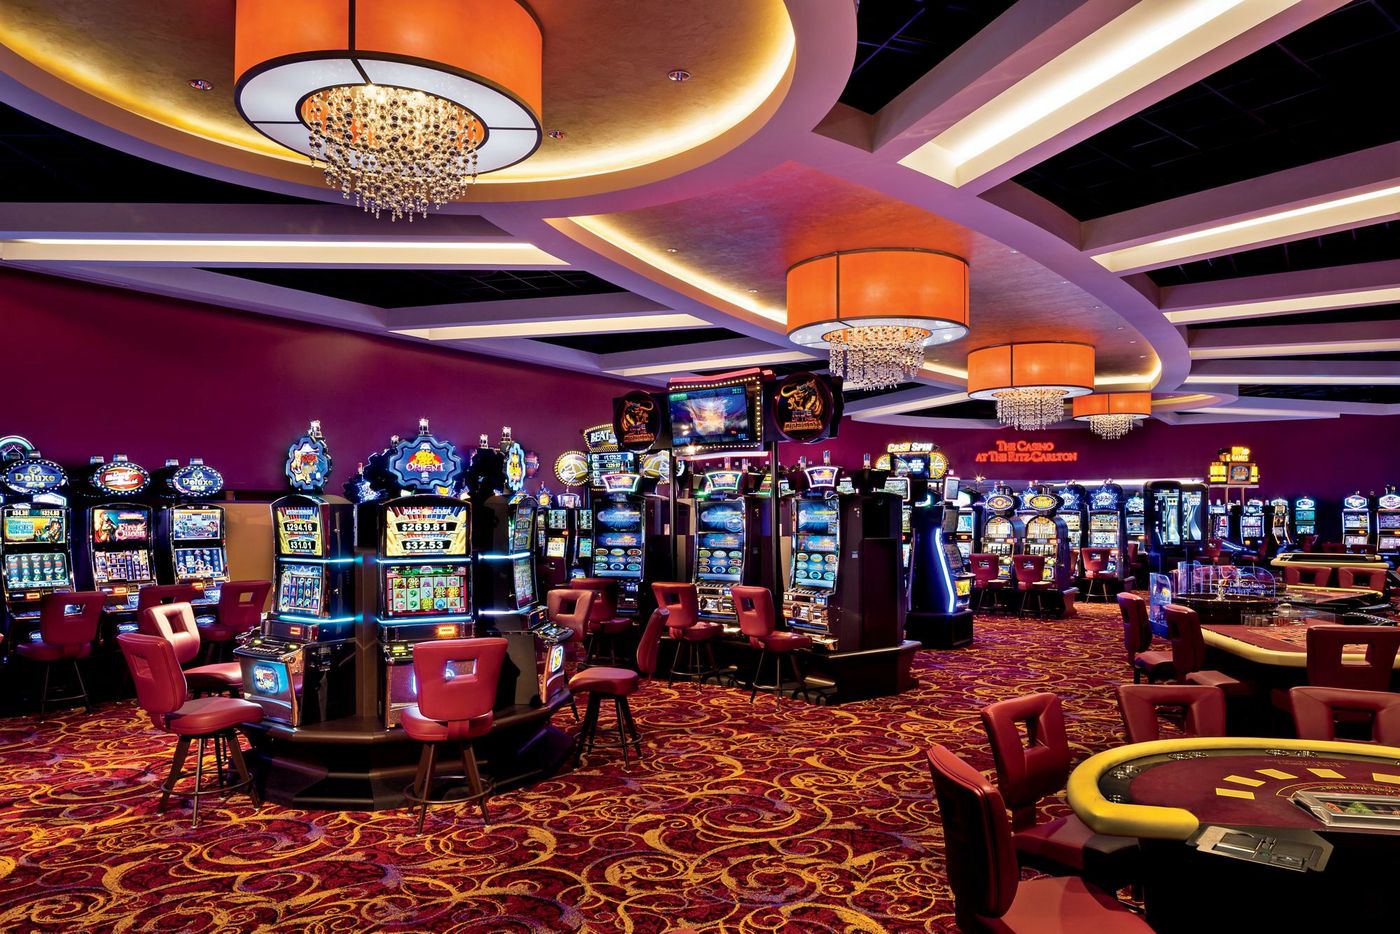 Gambling Casino